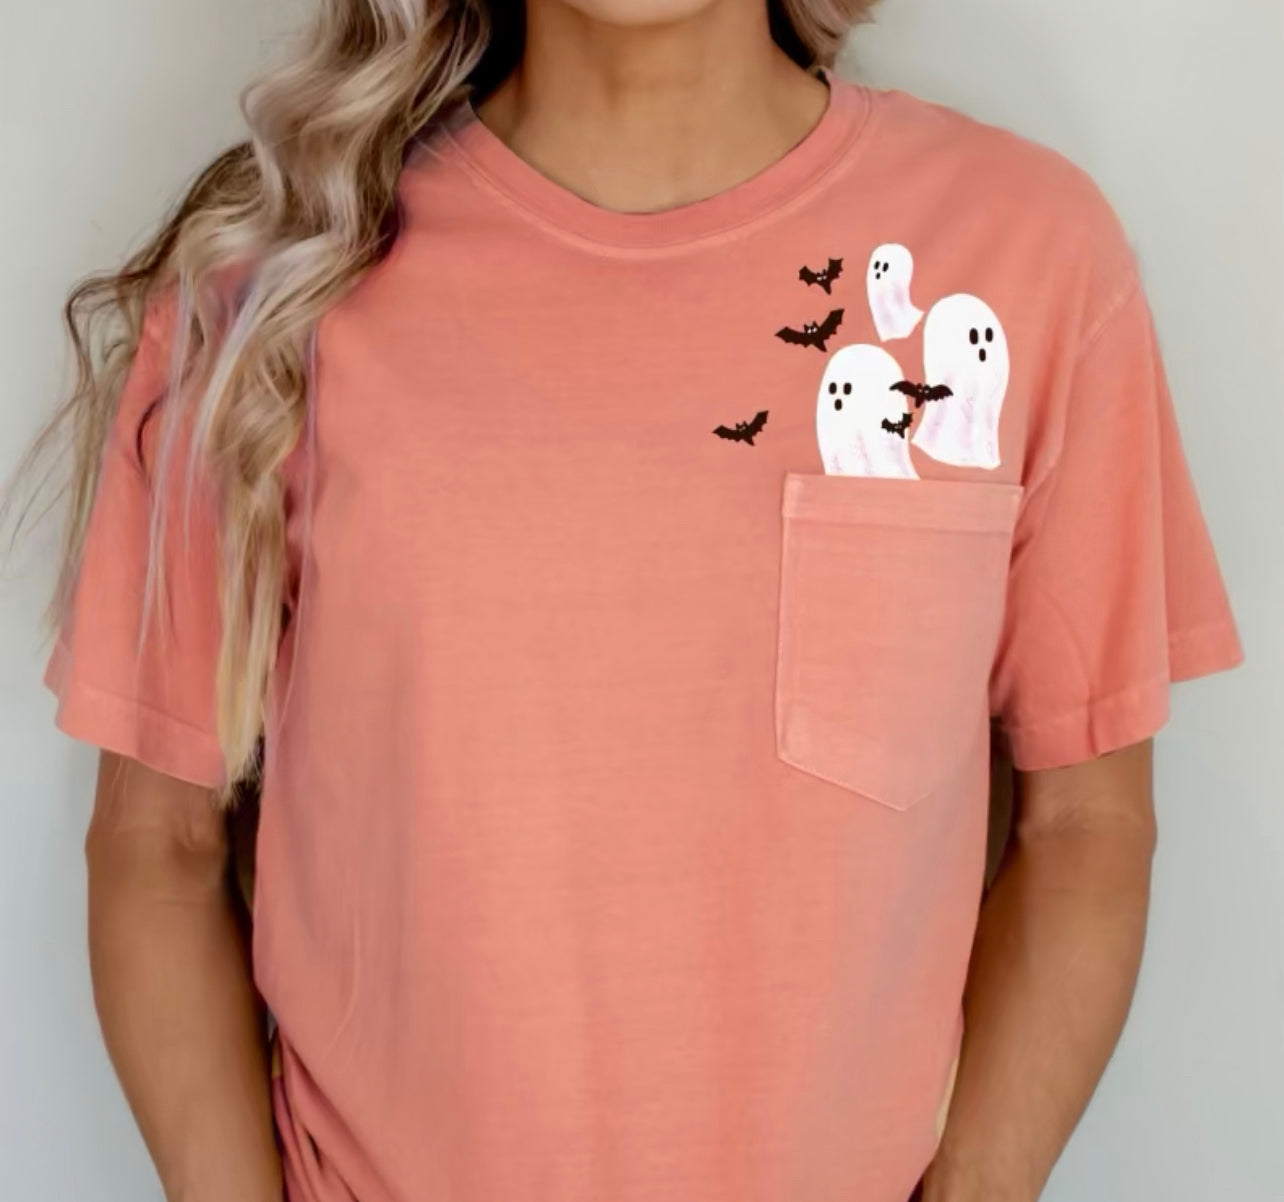 Ghost pocket tee| Halloween shirt| Fall vibes shirt| Fall shirt| Pumpkin shirts| Fall life shirt| Halloween tee